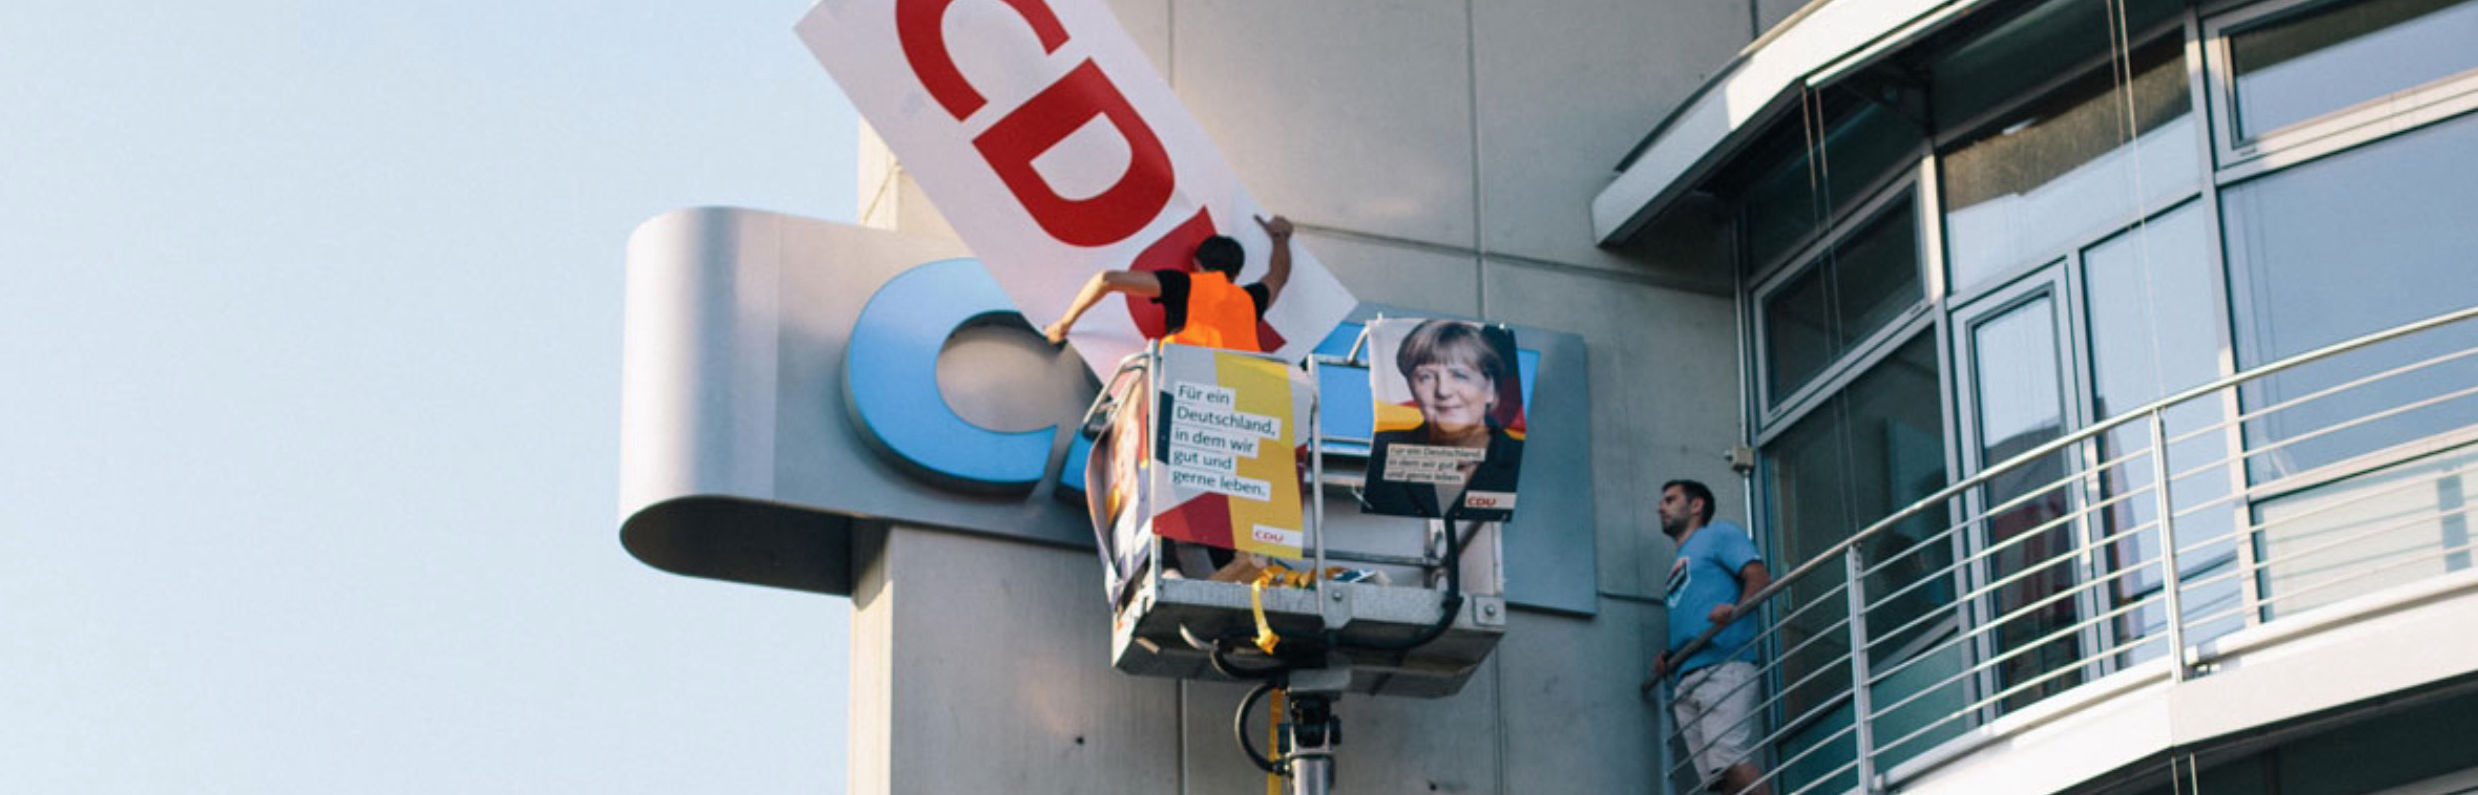 Aktionskunst: CDU Bayern